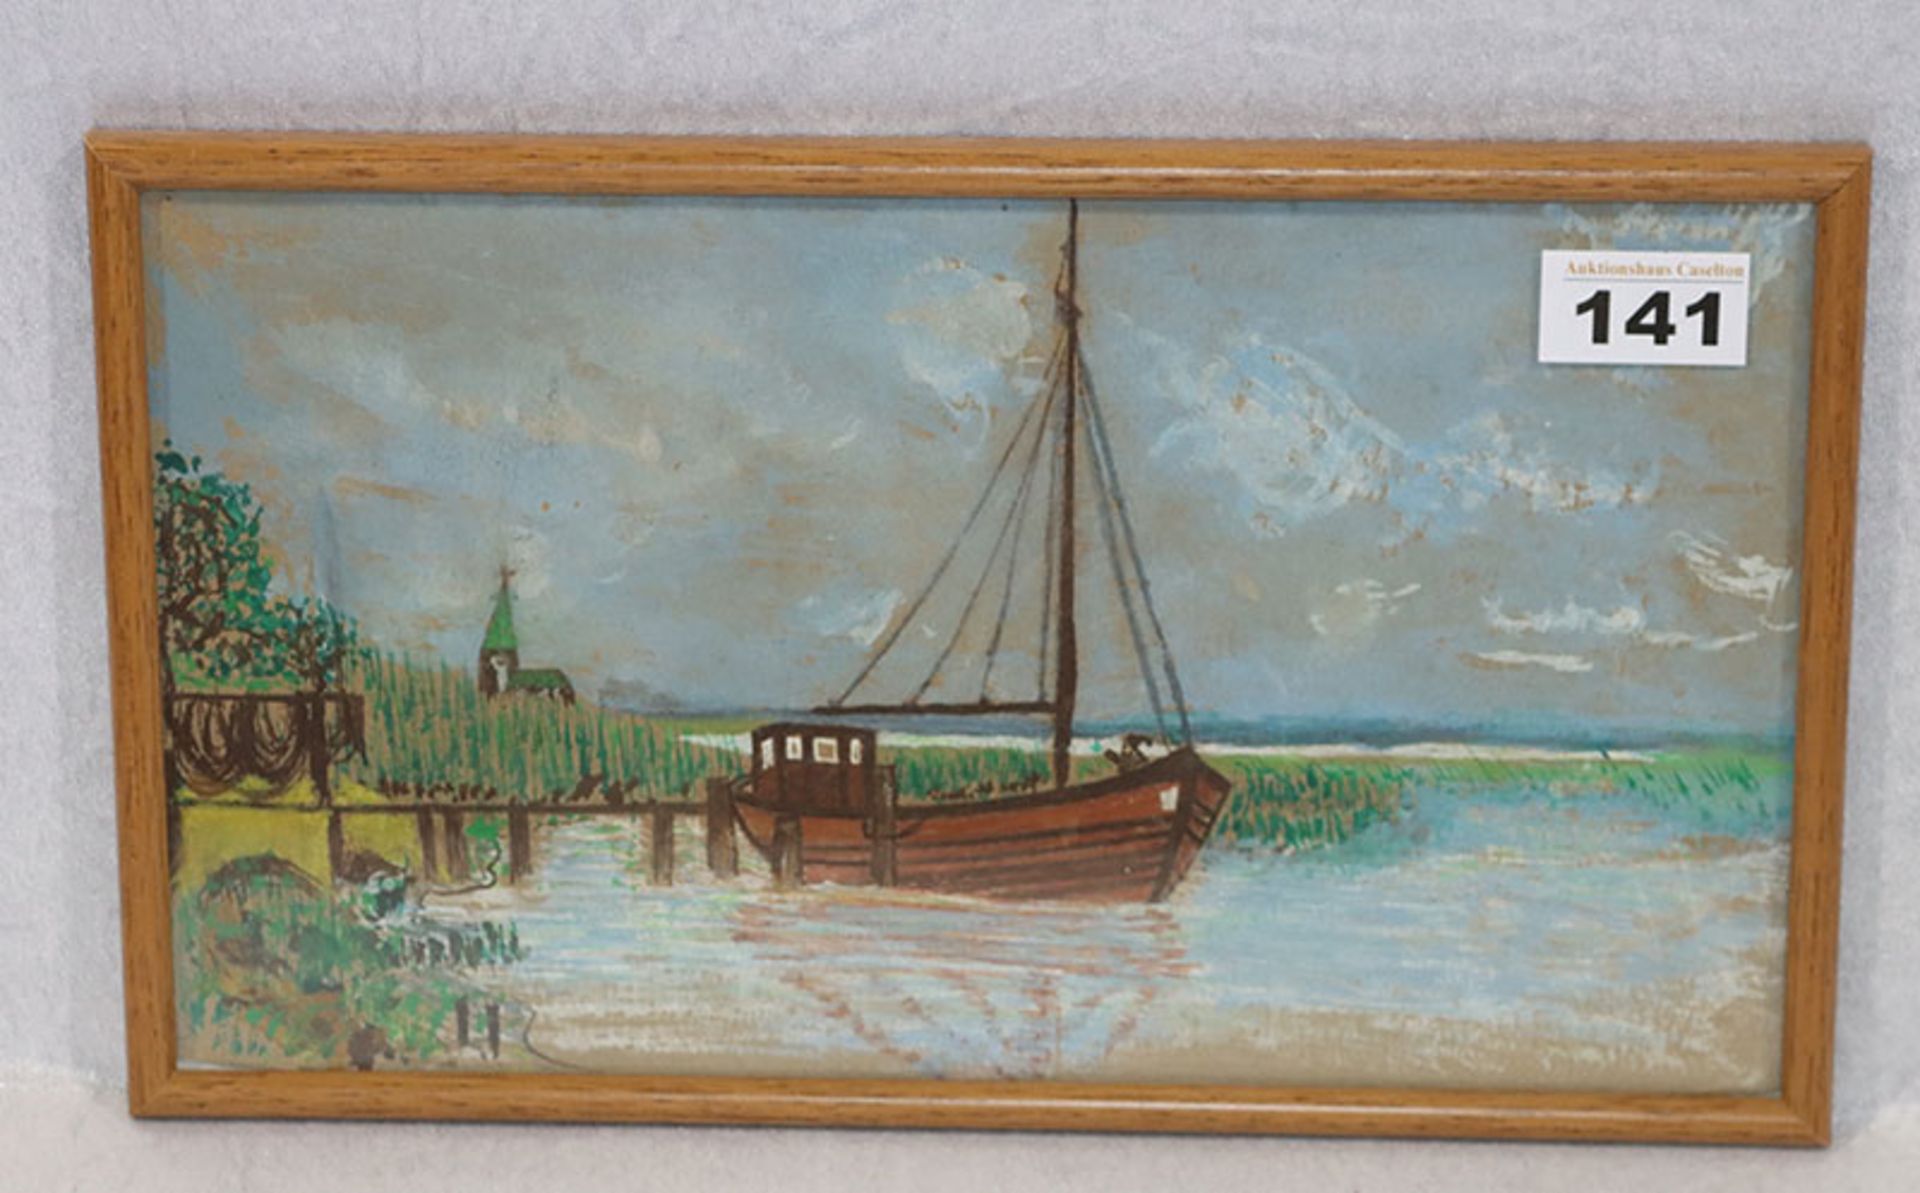 Gemälde Mischtechnik 'Ufer-Szenerie mit Schiff', unter Glas gerahmt, incl. Rahmen 19,5 cm x 33 cm